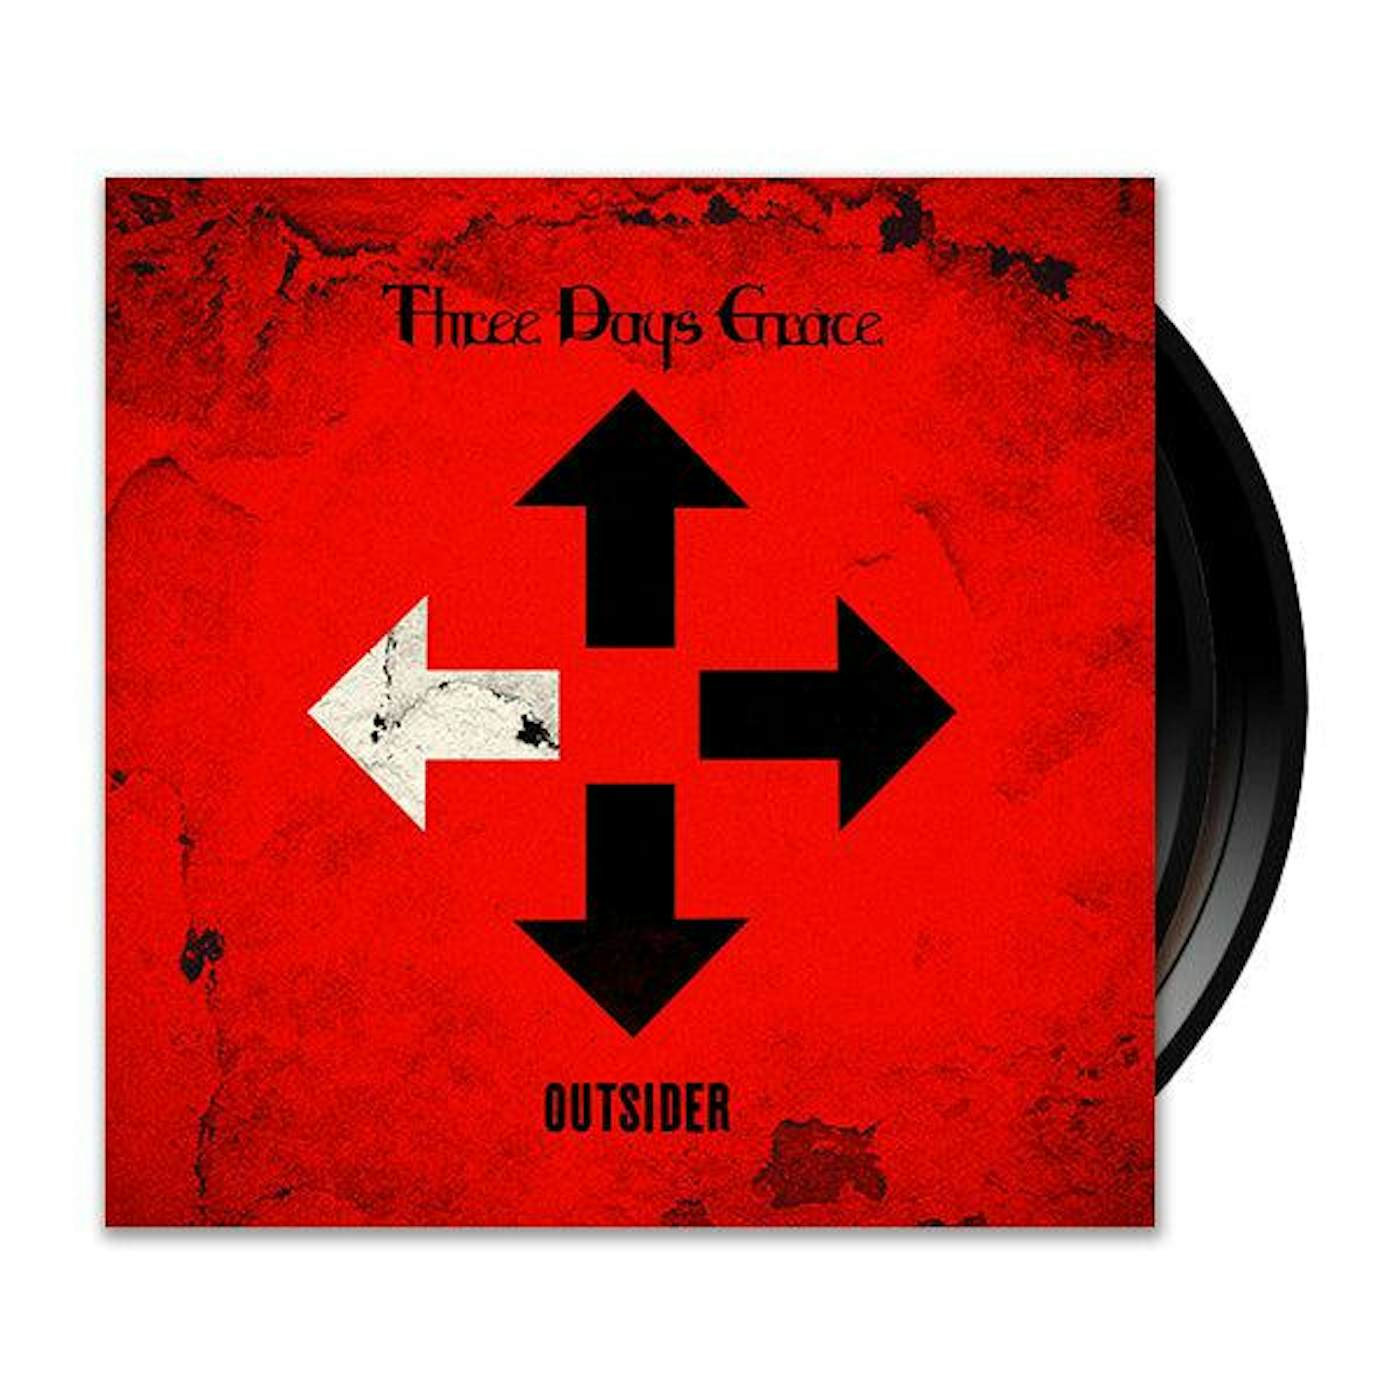 Three Days Grace Outsider on Vinyl